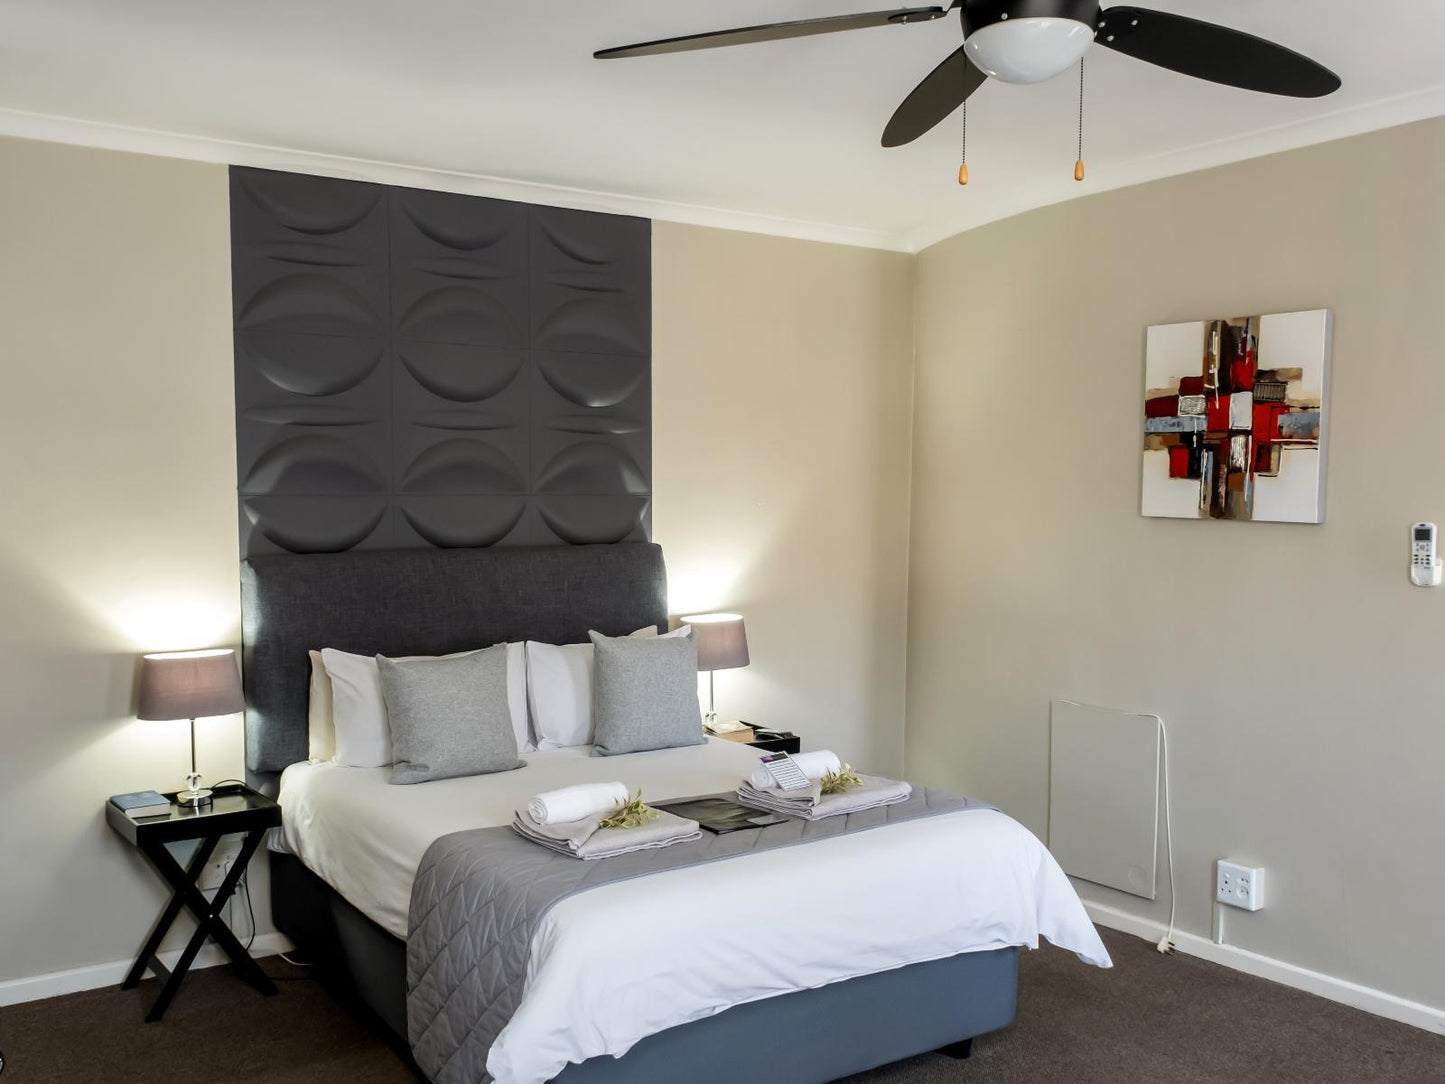 Standard Room 6 with kitchenette @ Plattekloof Premium Lodge